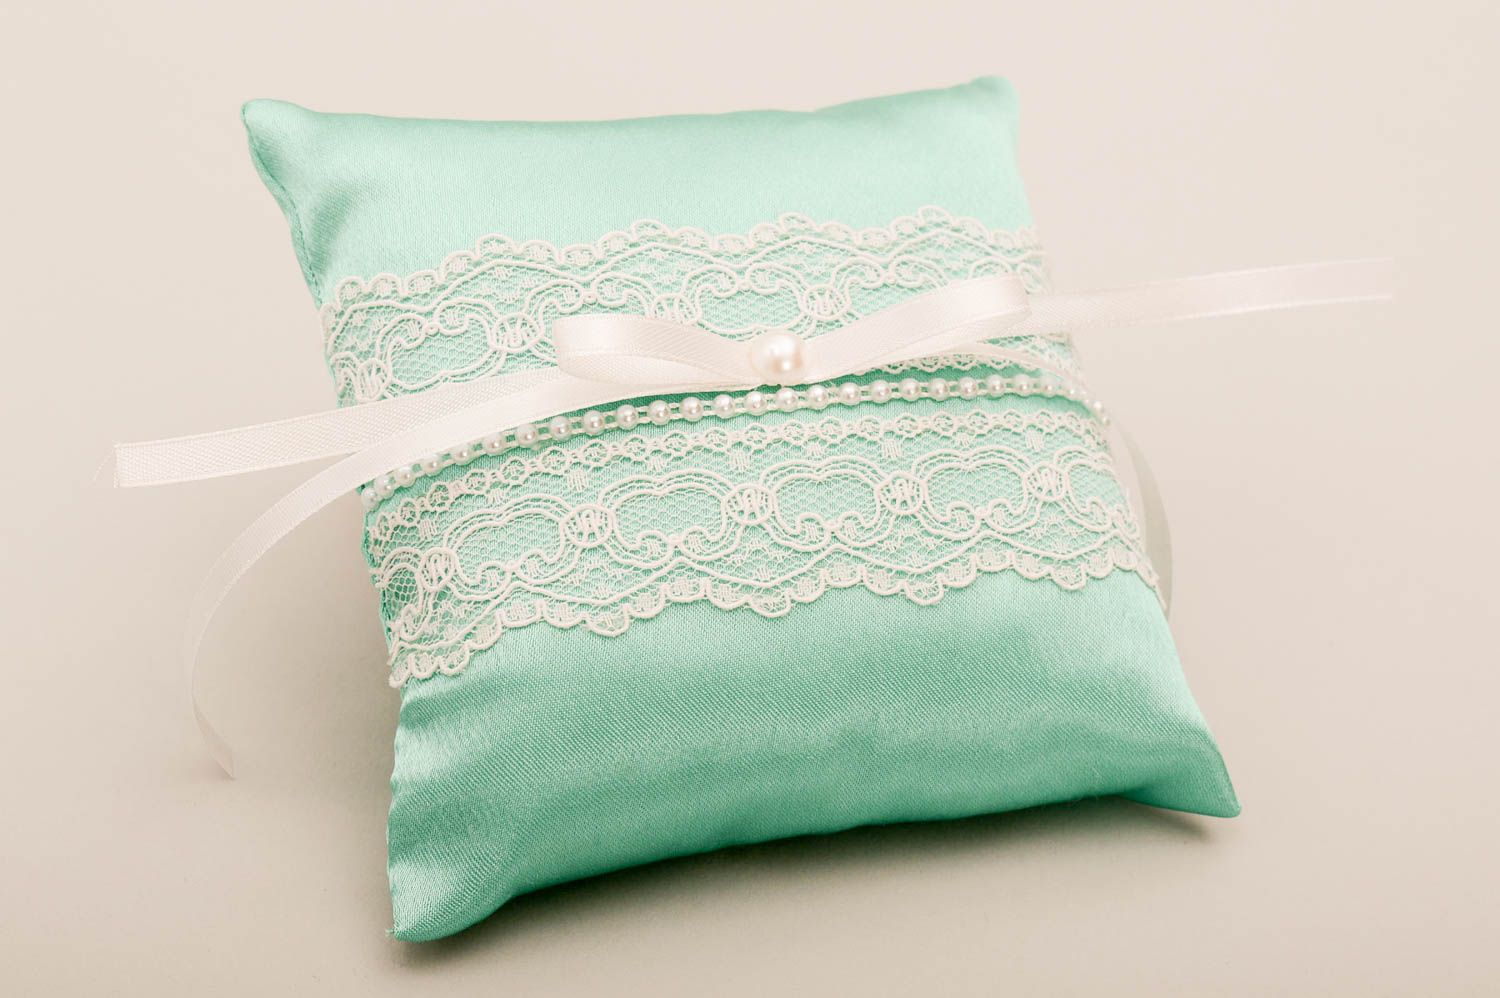 Handmade pillow designer pillow for rings wedding accessories decor ideas photo 2